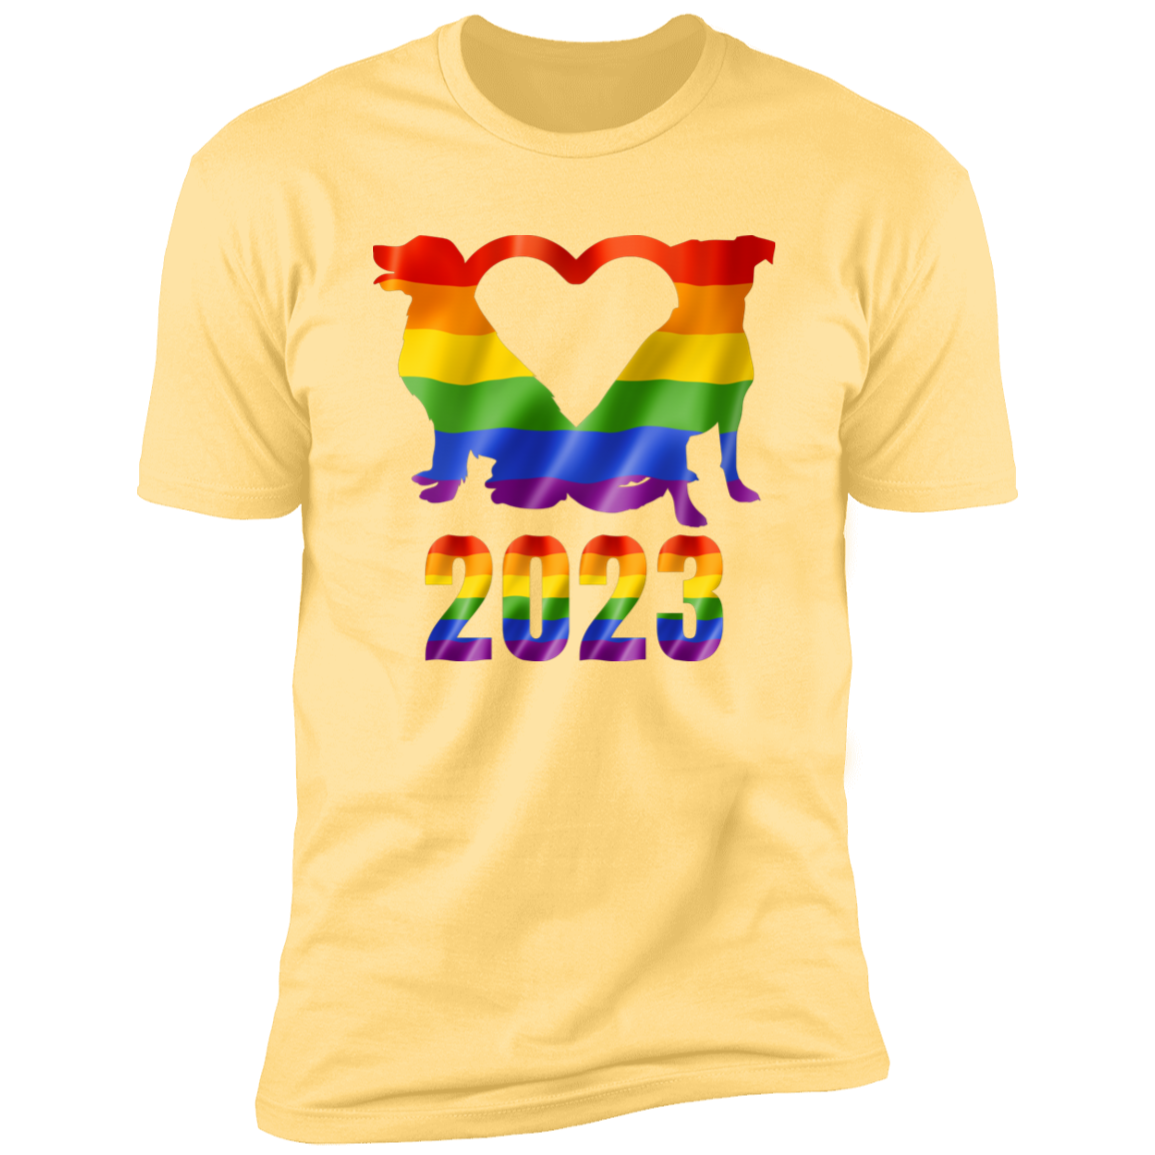 Dog Pride 2023, dog pride dog shirt for humans, in banana cream